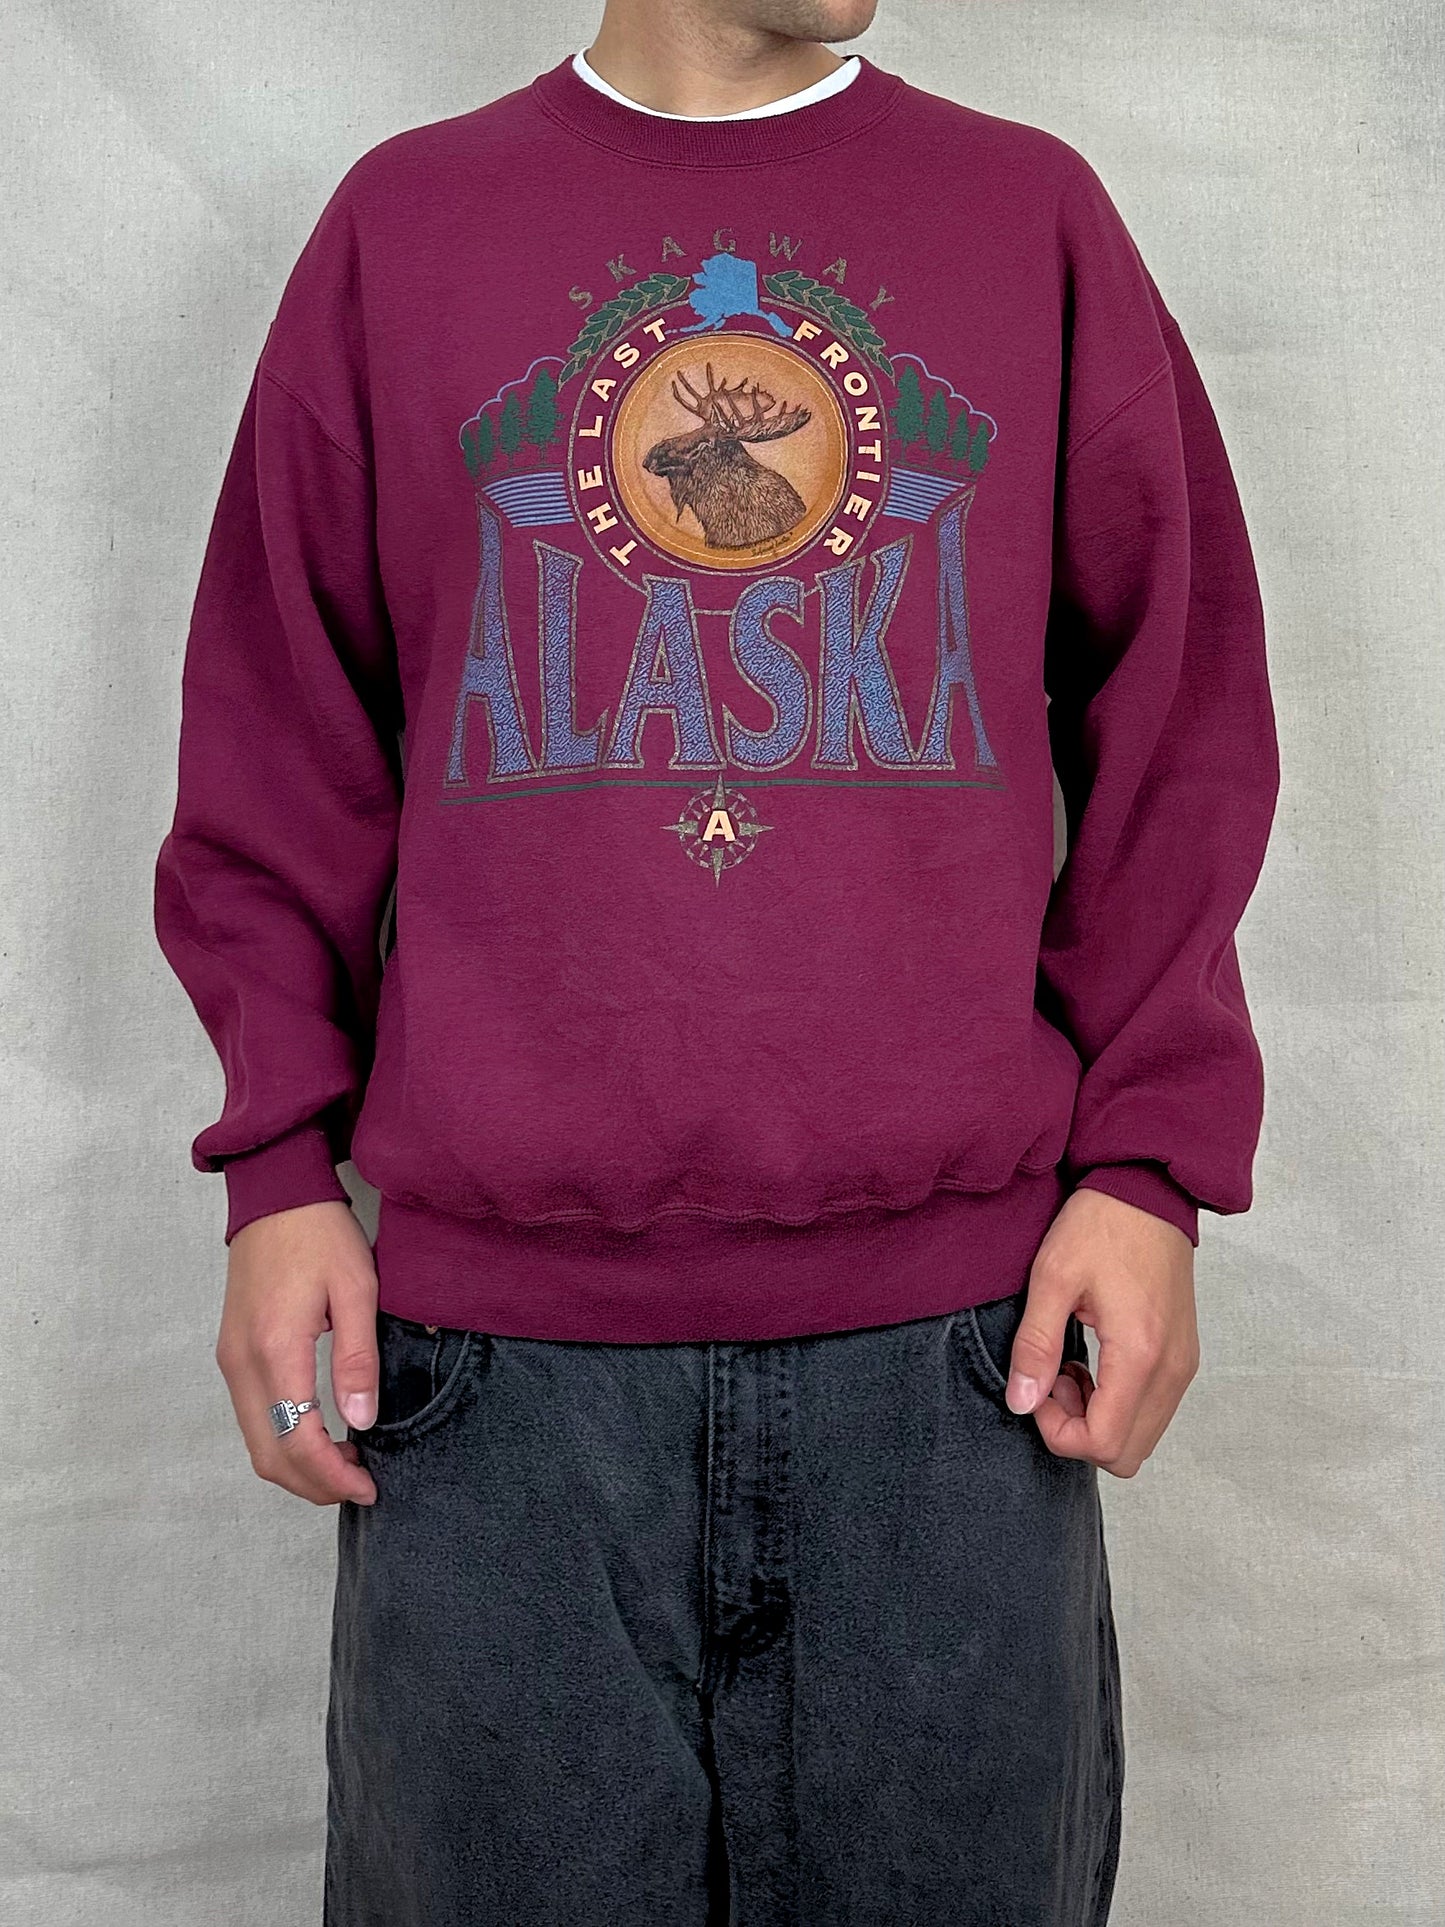 90's Skagway Alaska USA Made Vintage Sweatshirt Size L